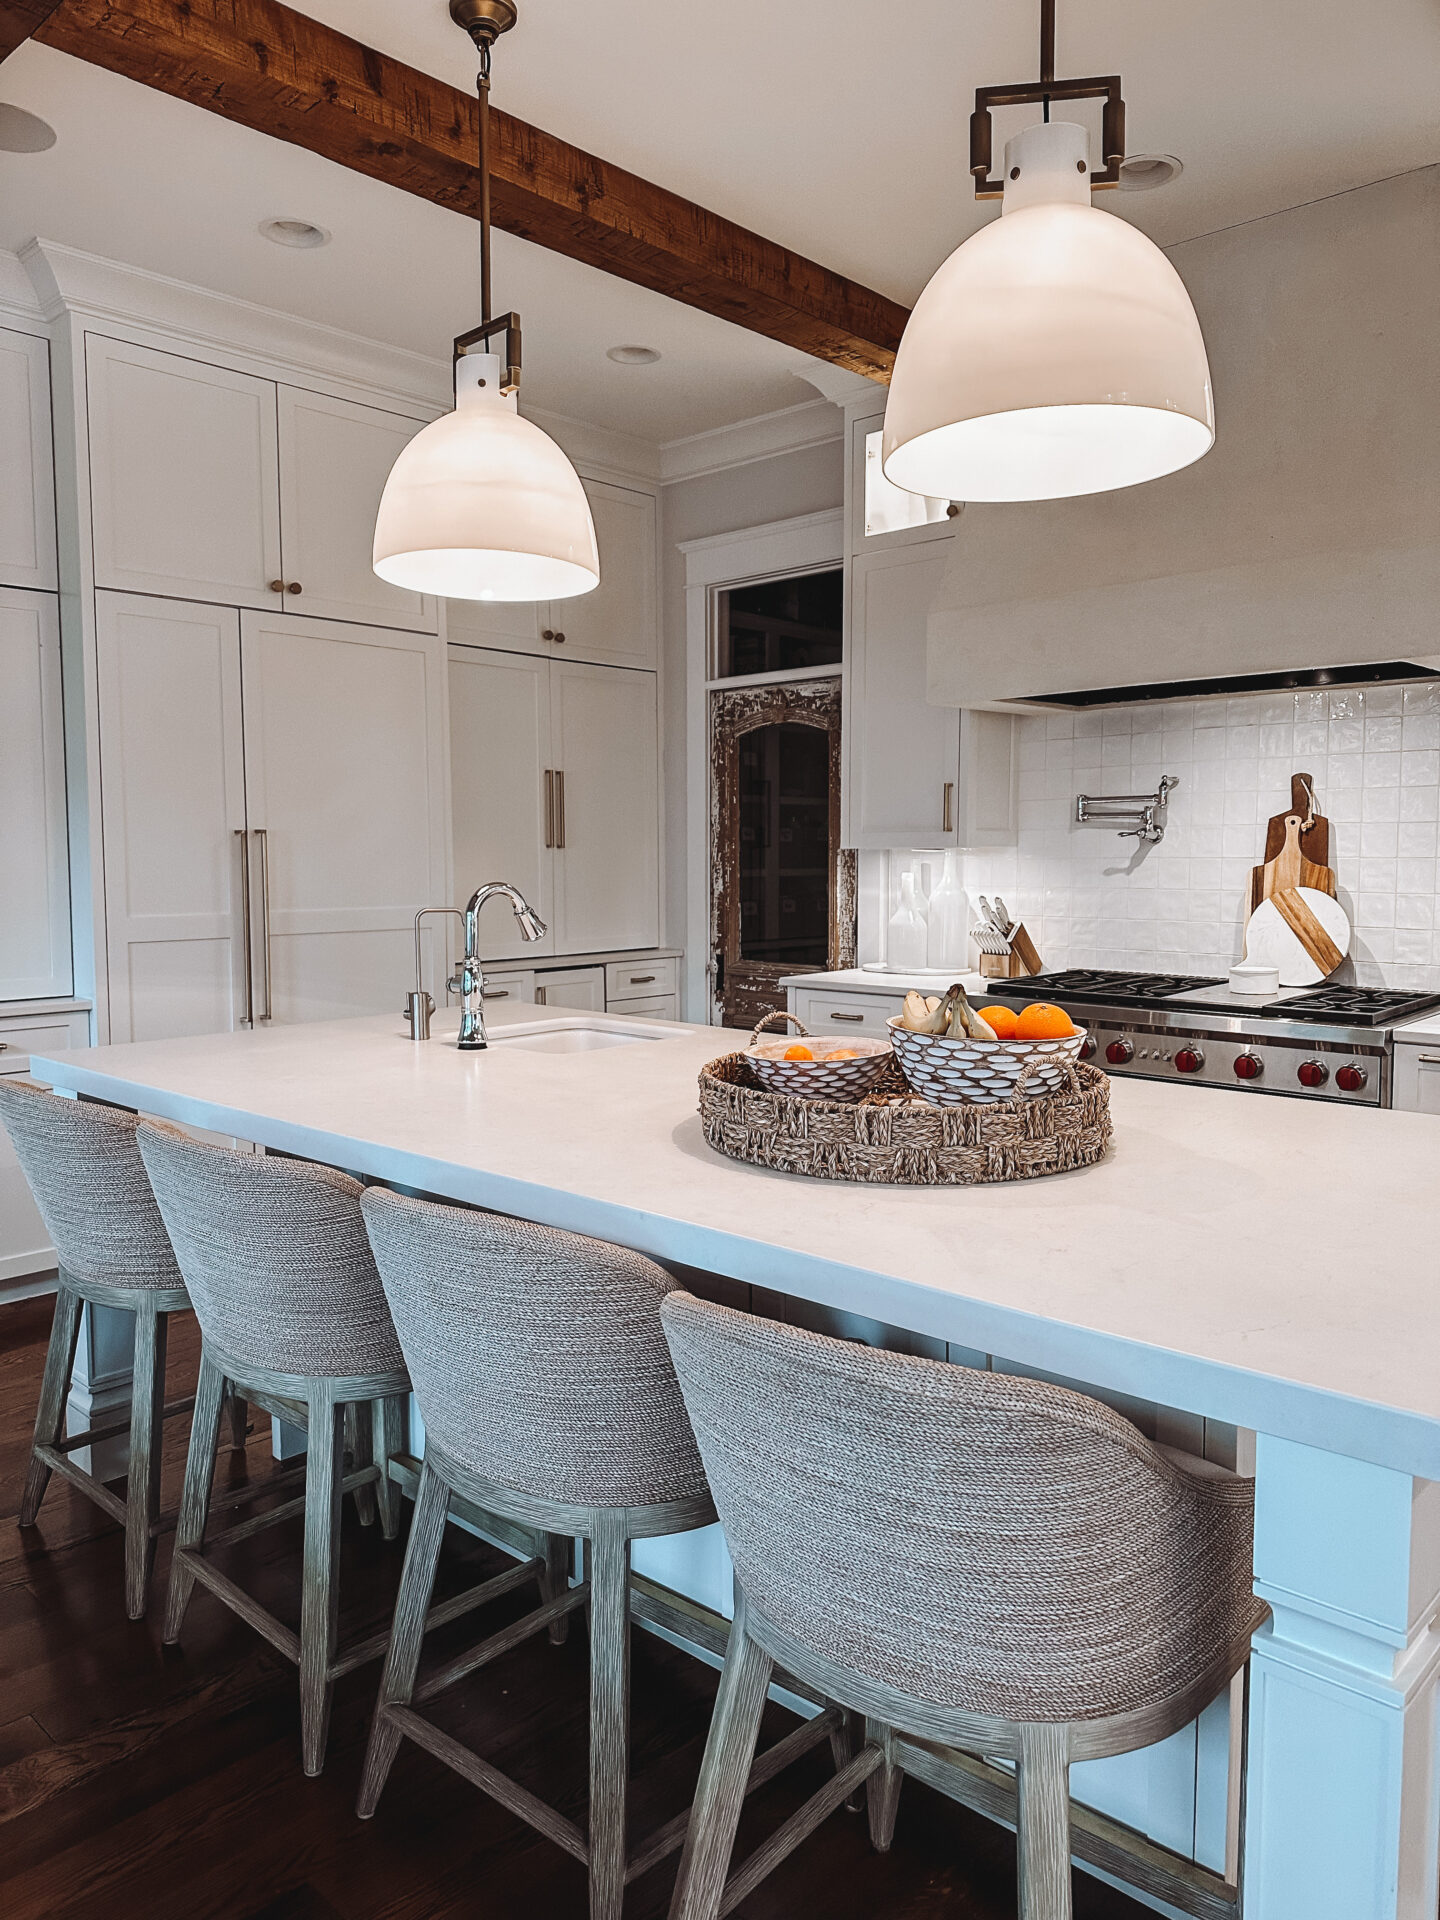 my nashville kitchen sources home renovation by lifestyle blogger angela lanter